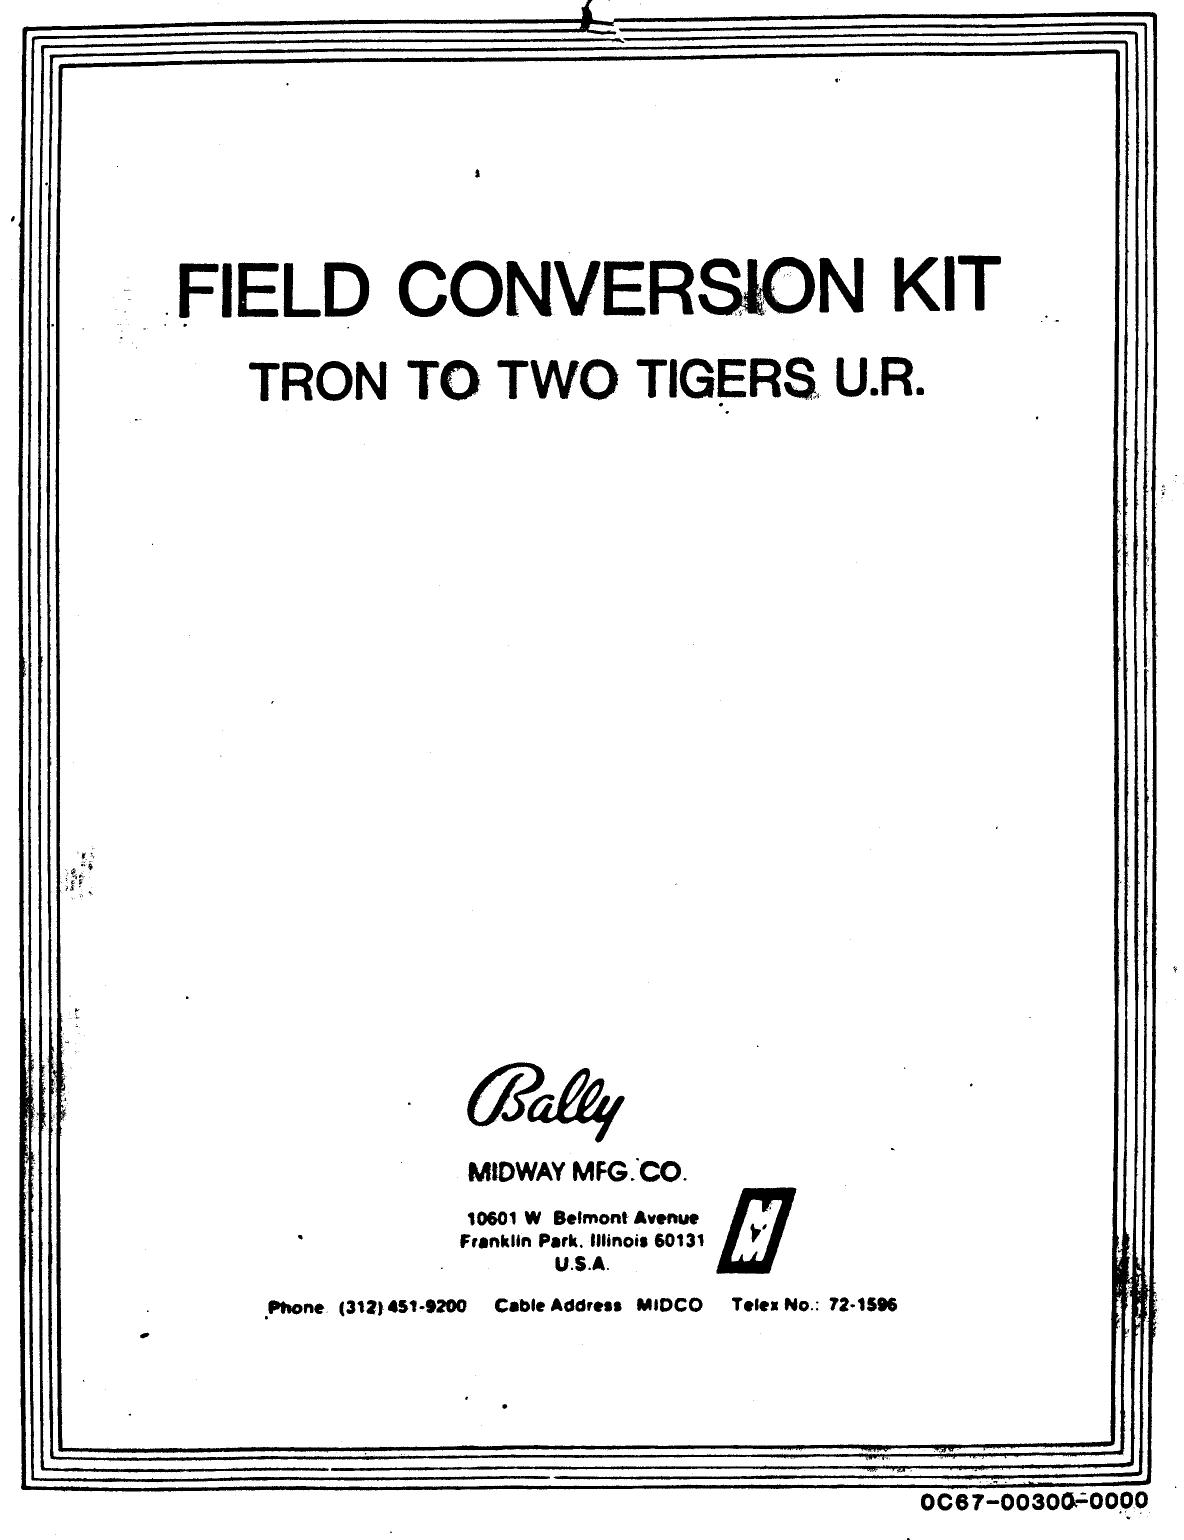 Two Tigers (from Tron) (Field Conv. Kit) (U)